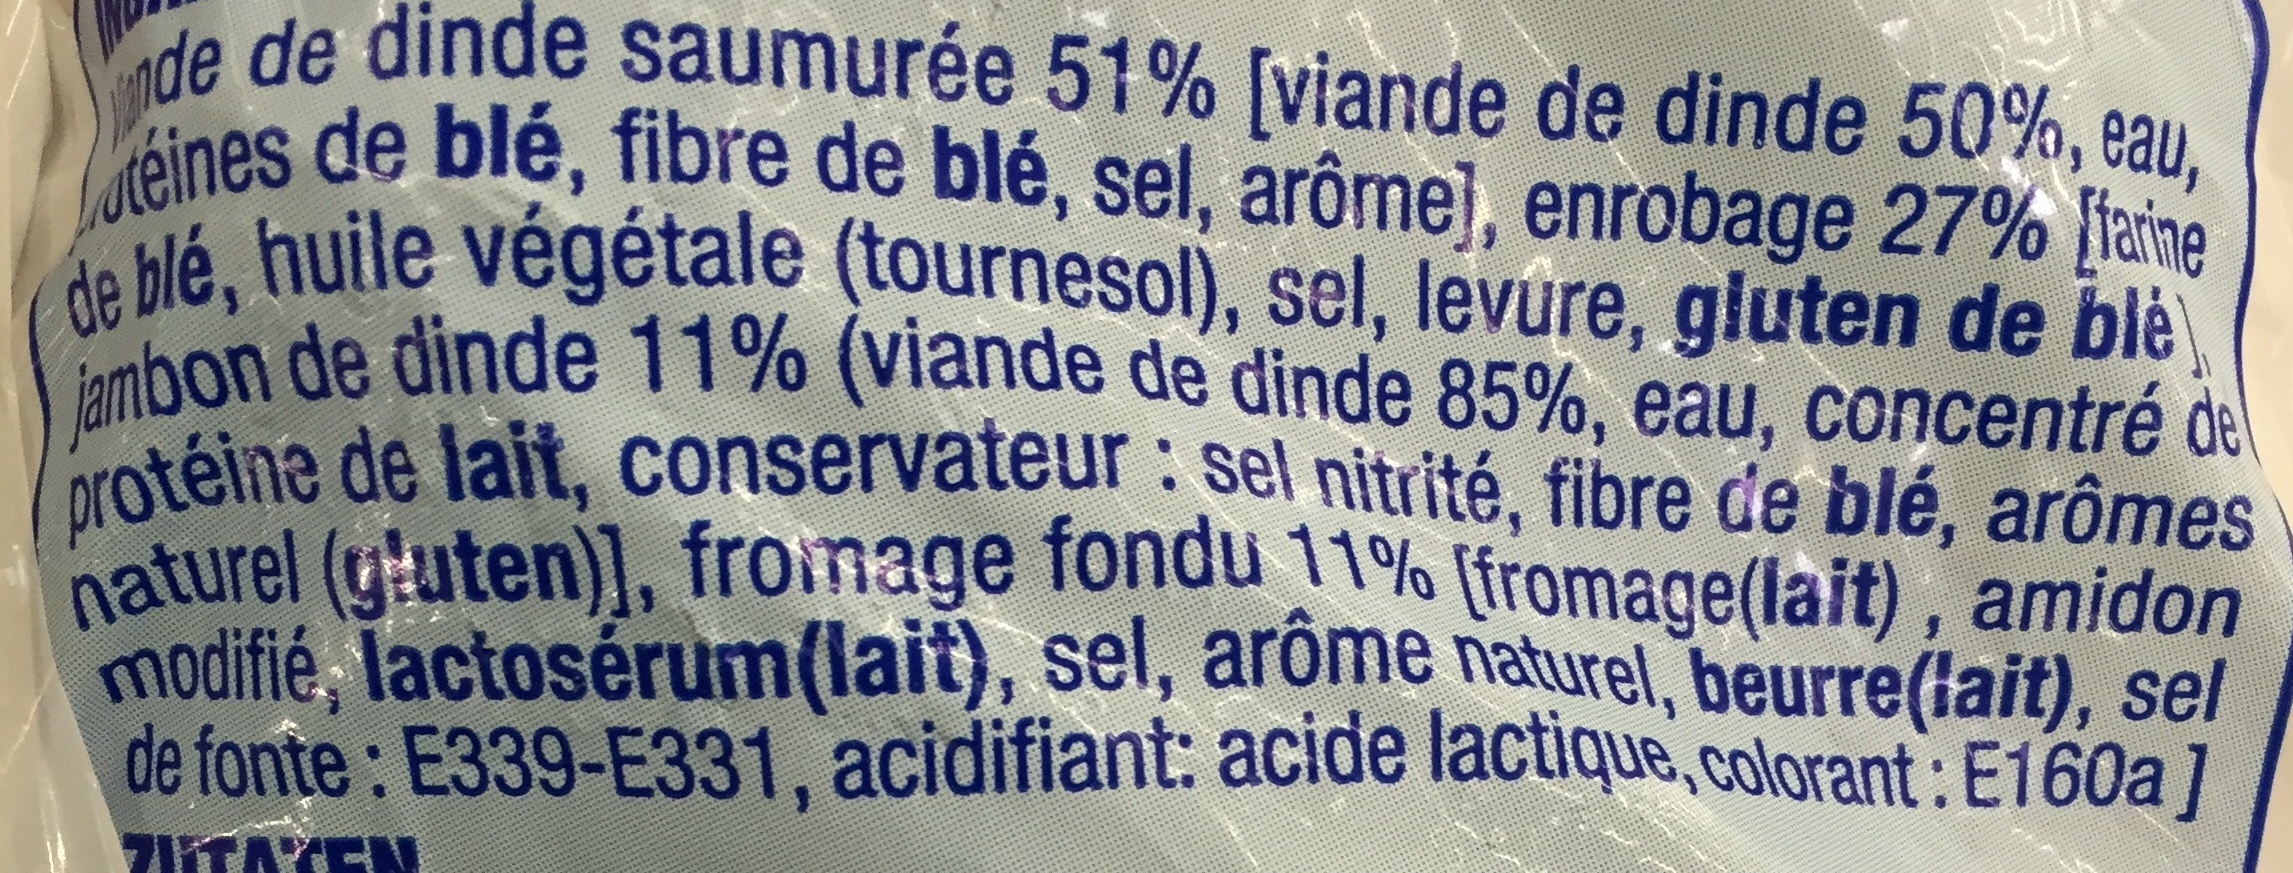 10 cordons bleus - Ingredients - fr